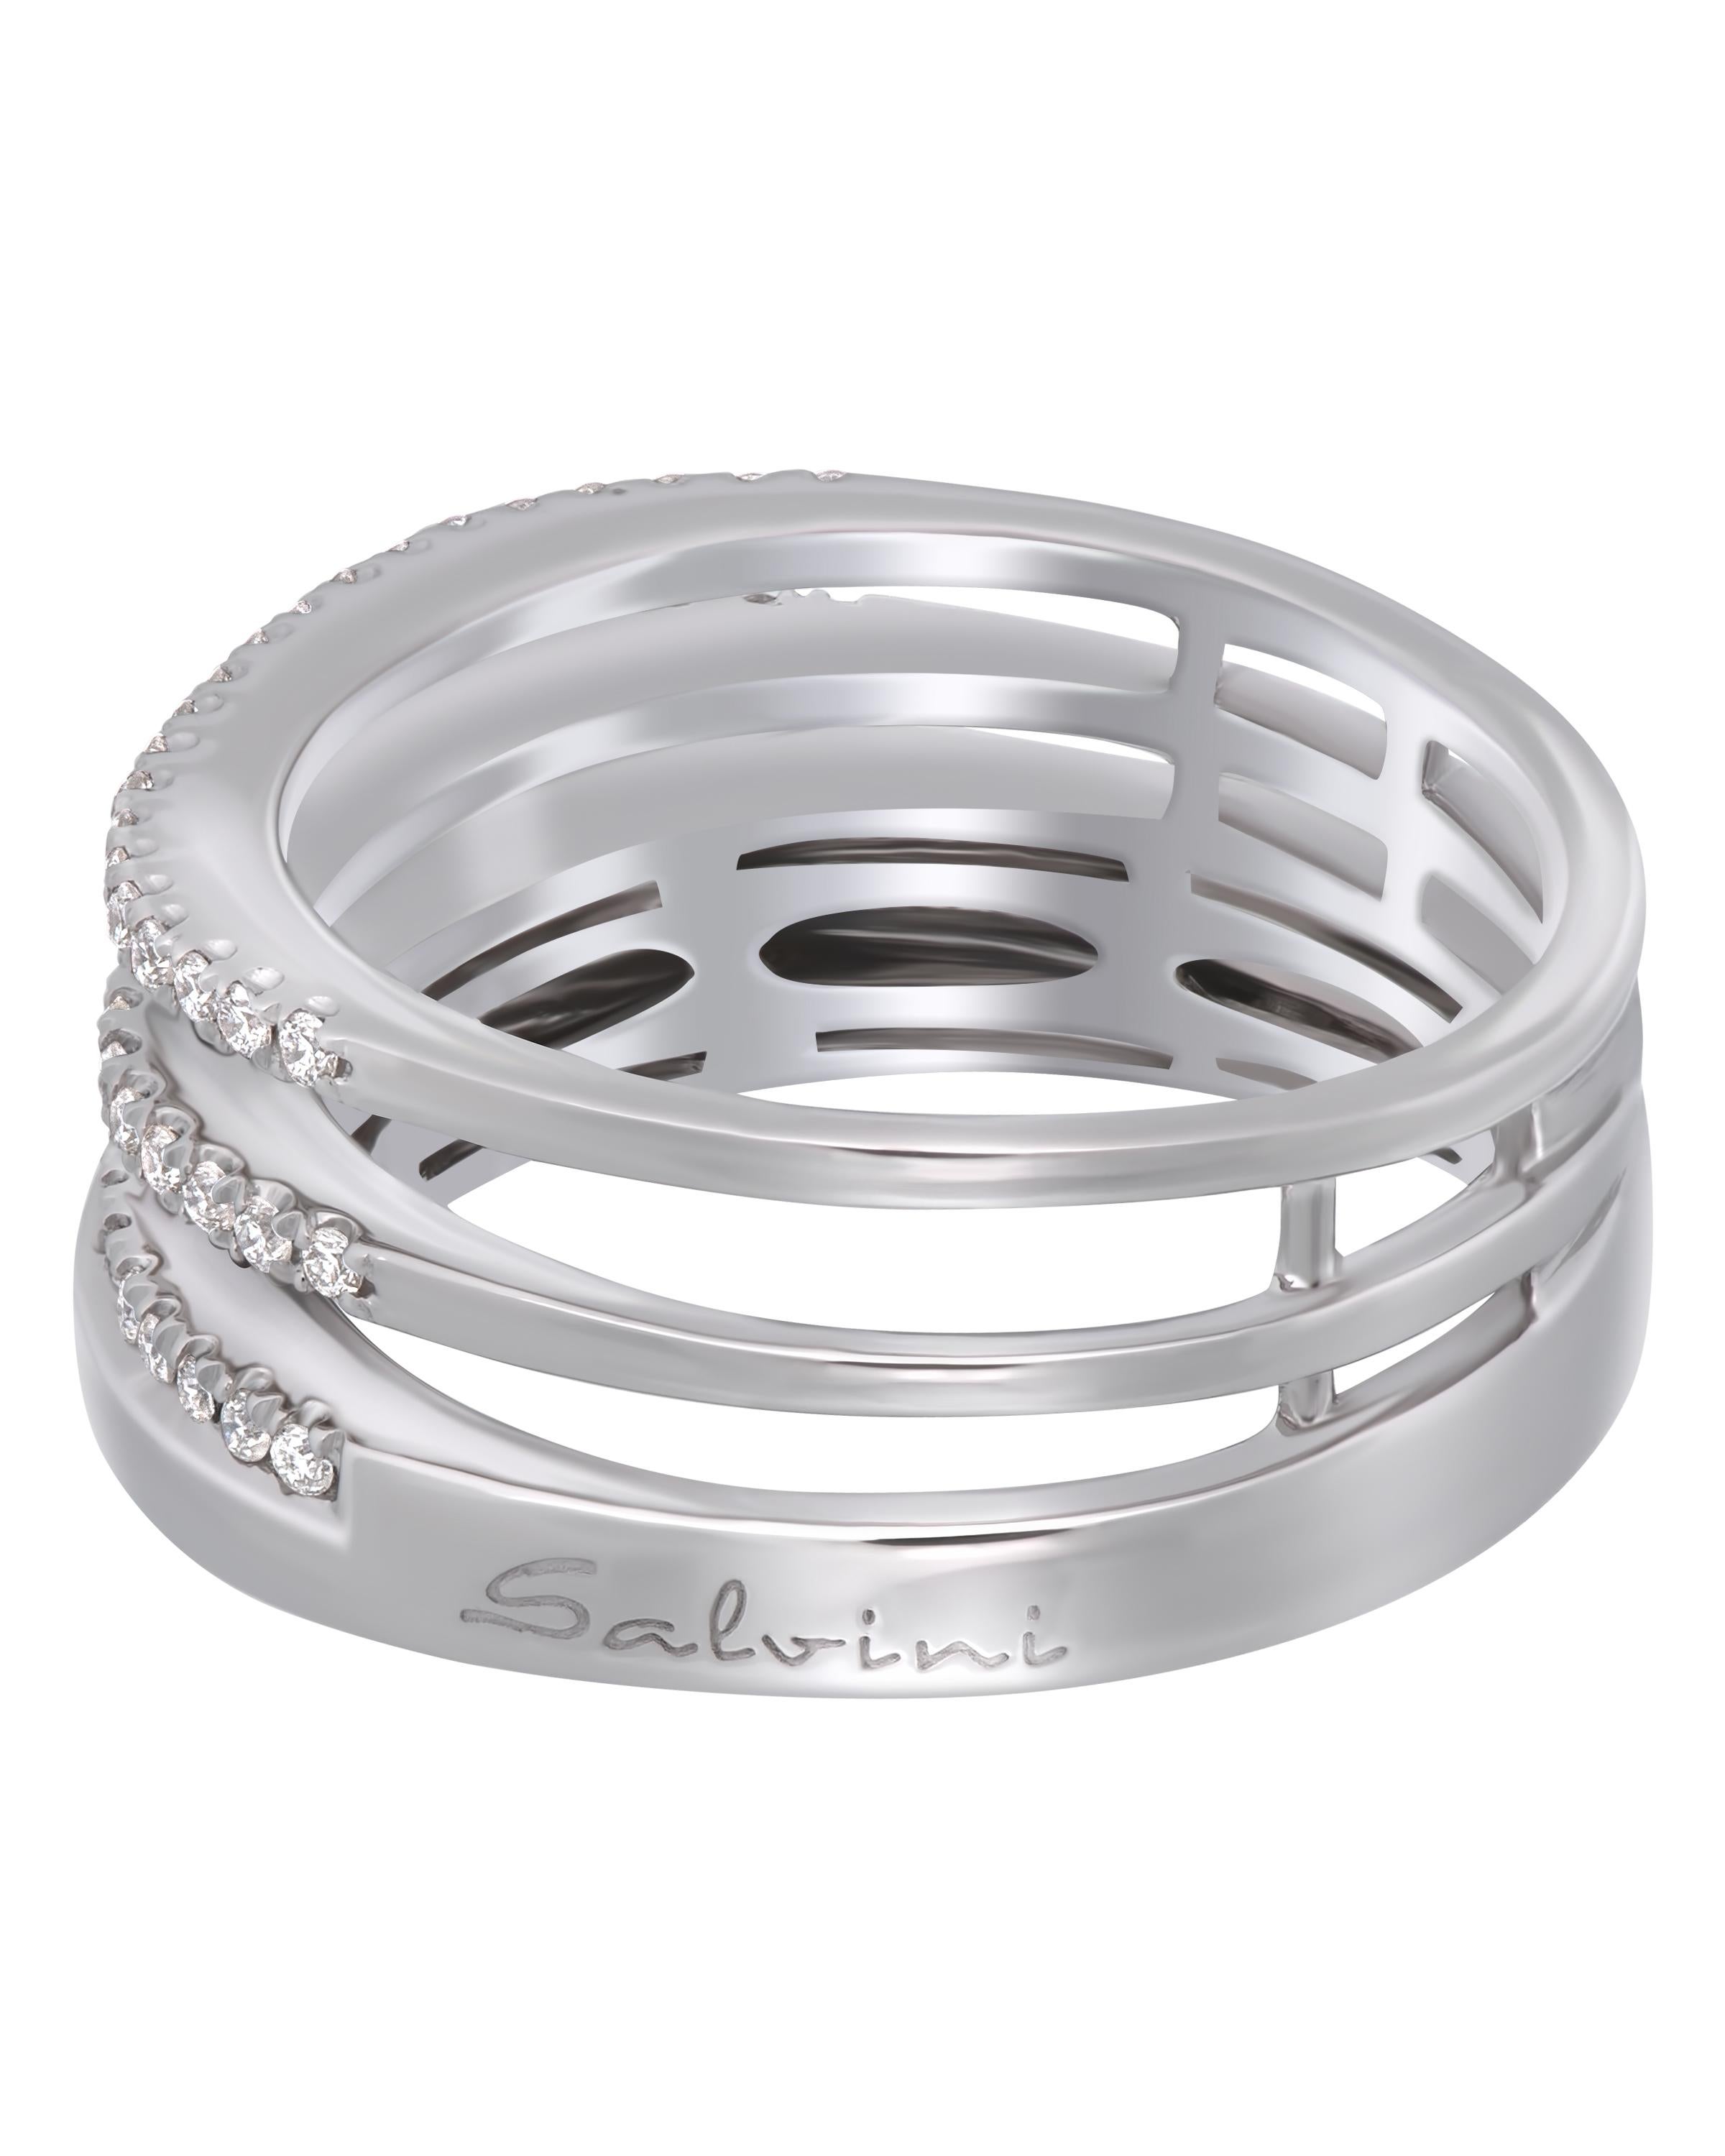 Contemporary SALVINI 18K White Gold Diamond Band Ring sz 6.5 For Sale